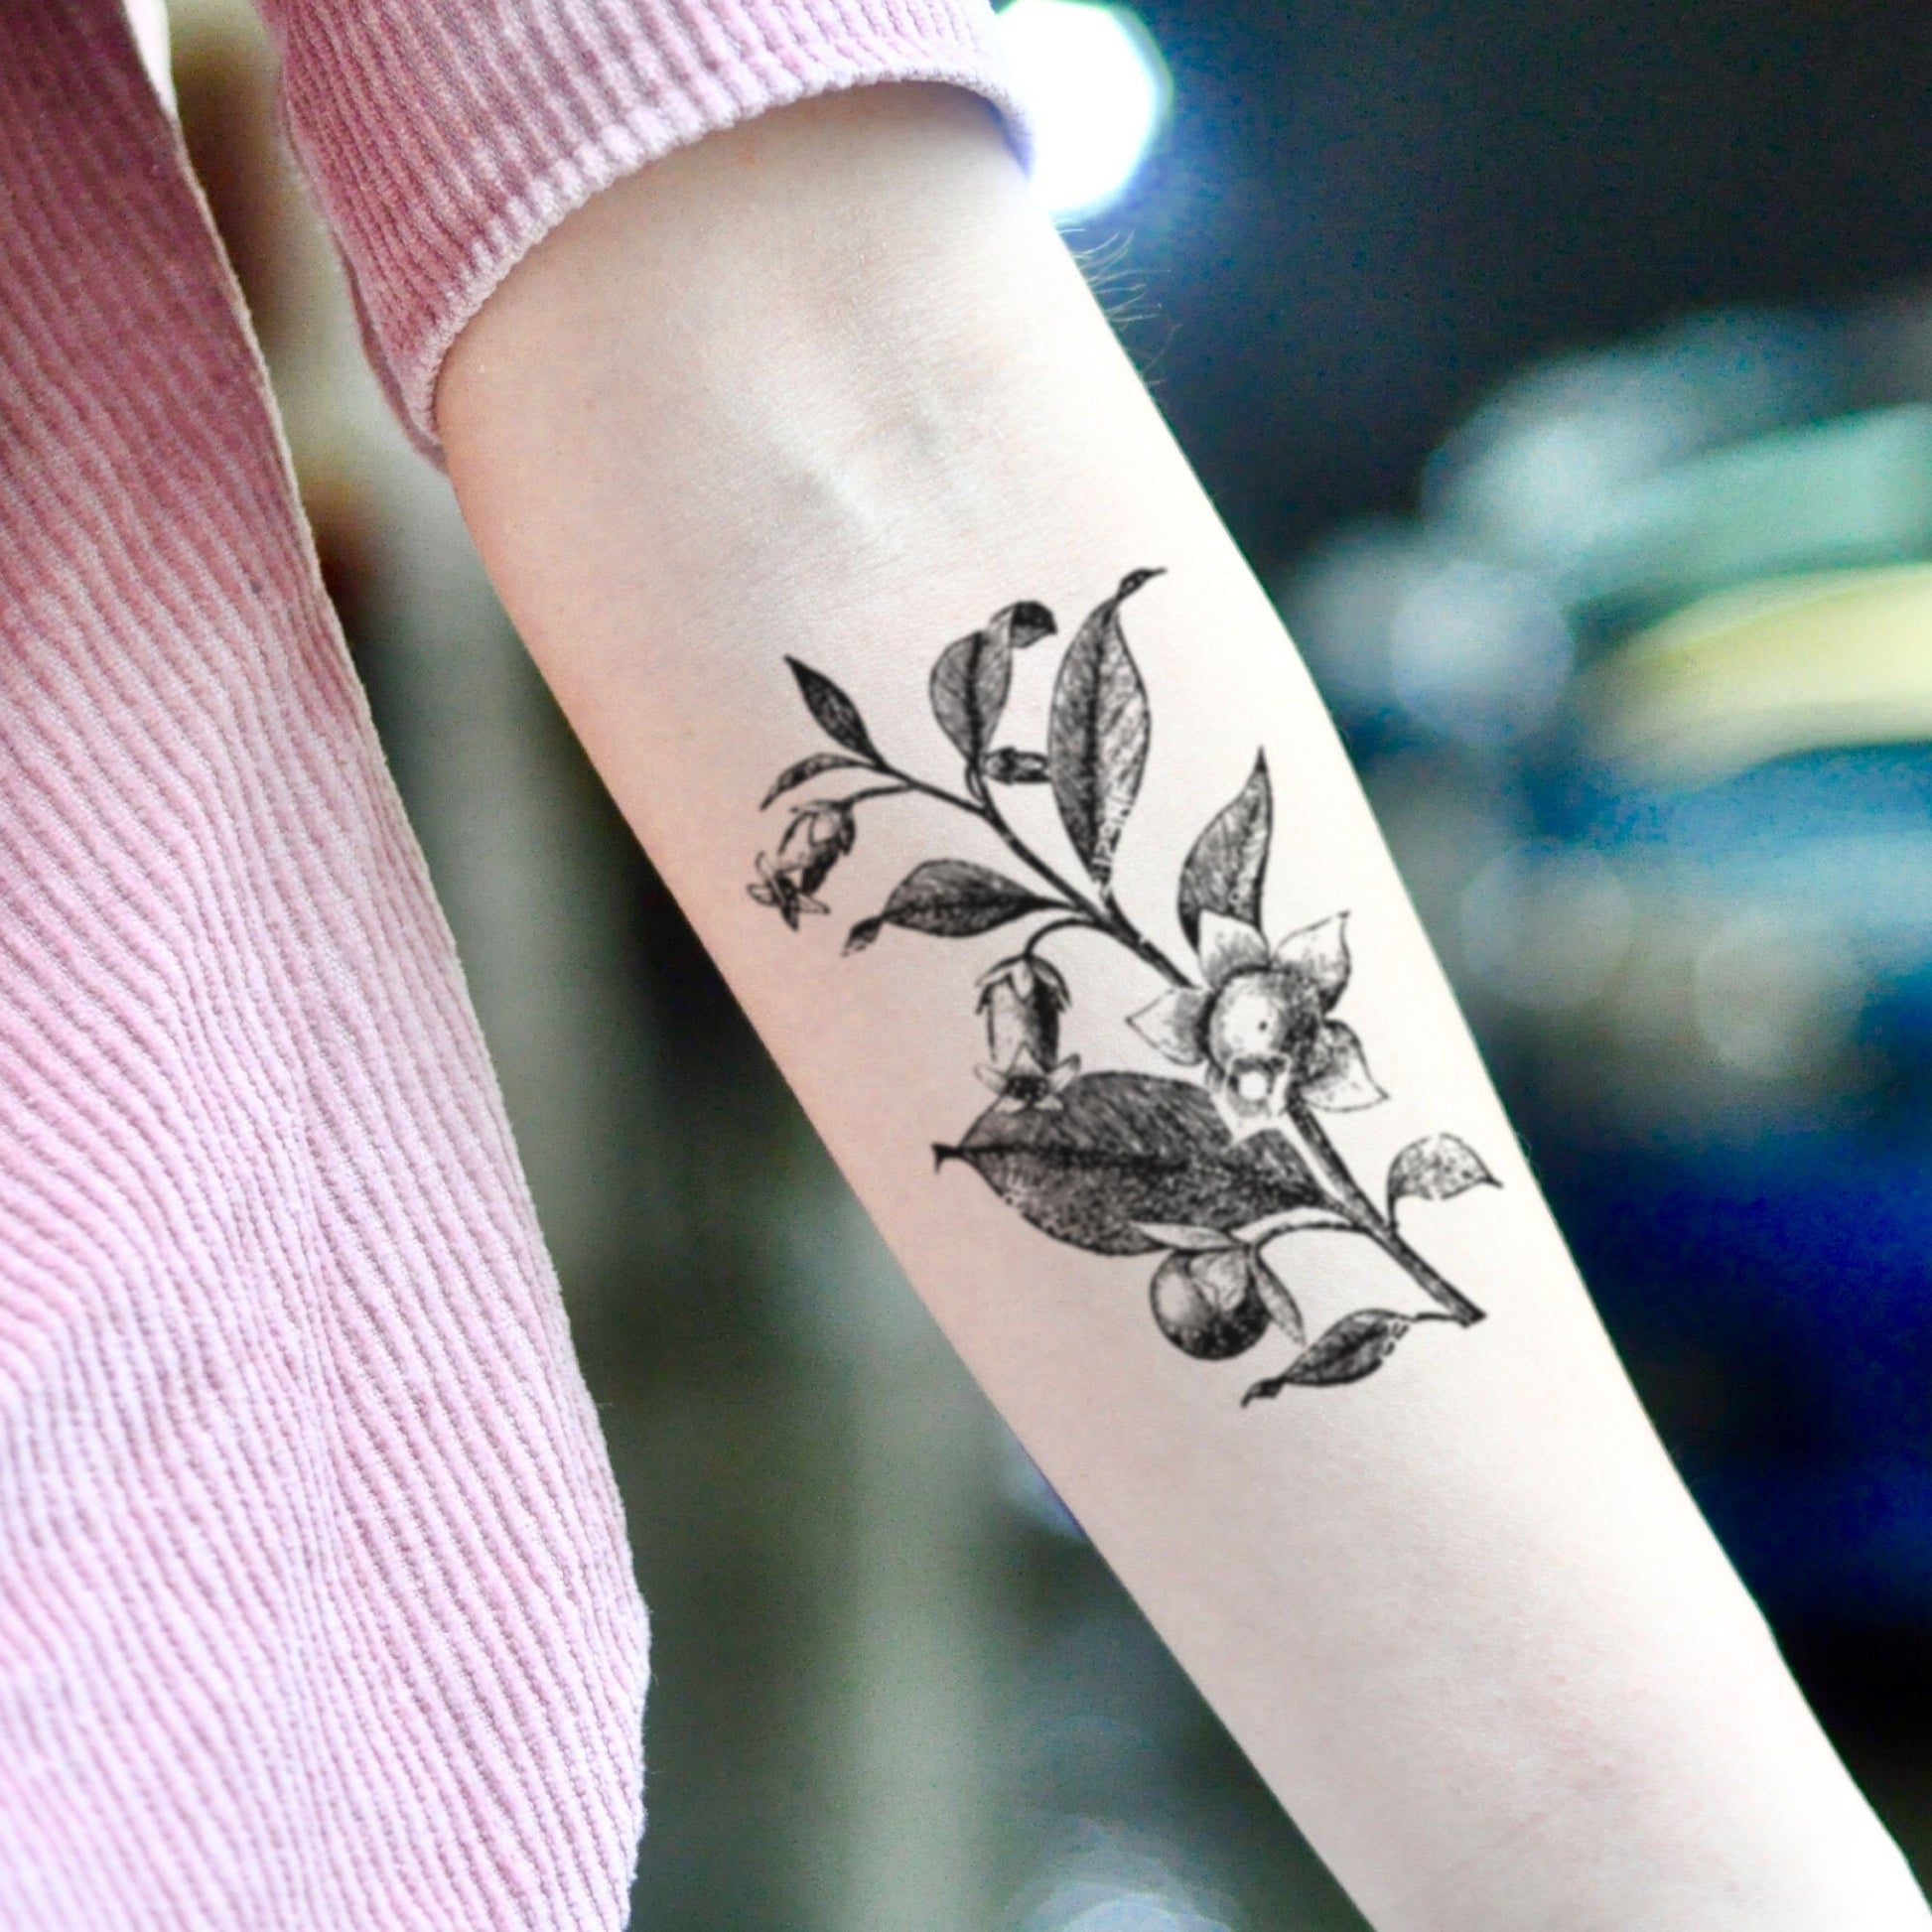 fake medium belladonna deadly nightshade flower temporary tattoo sticker design idea on inner arm